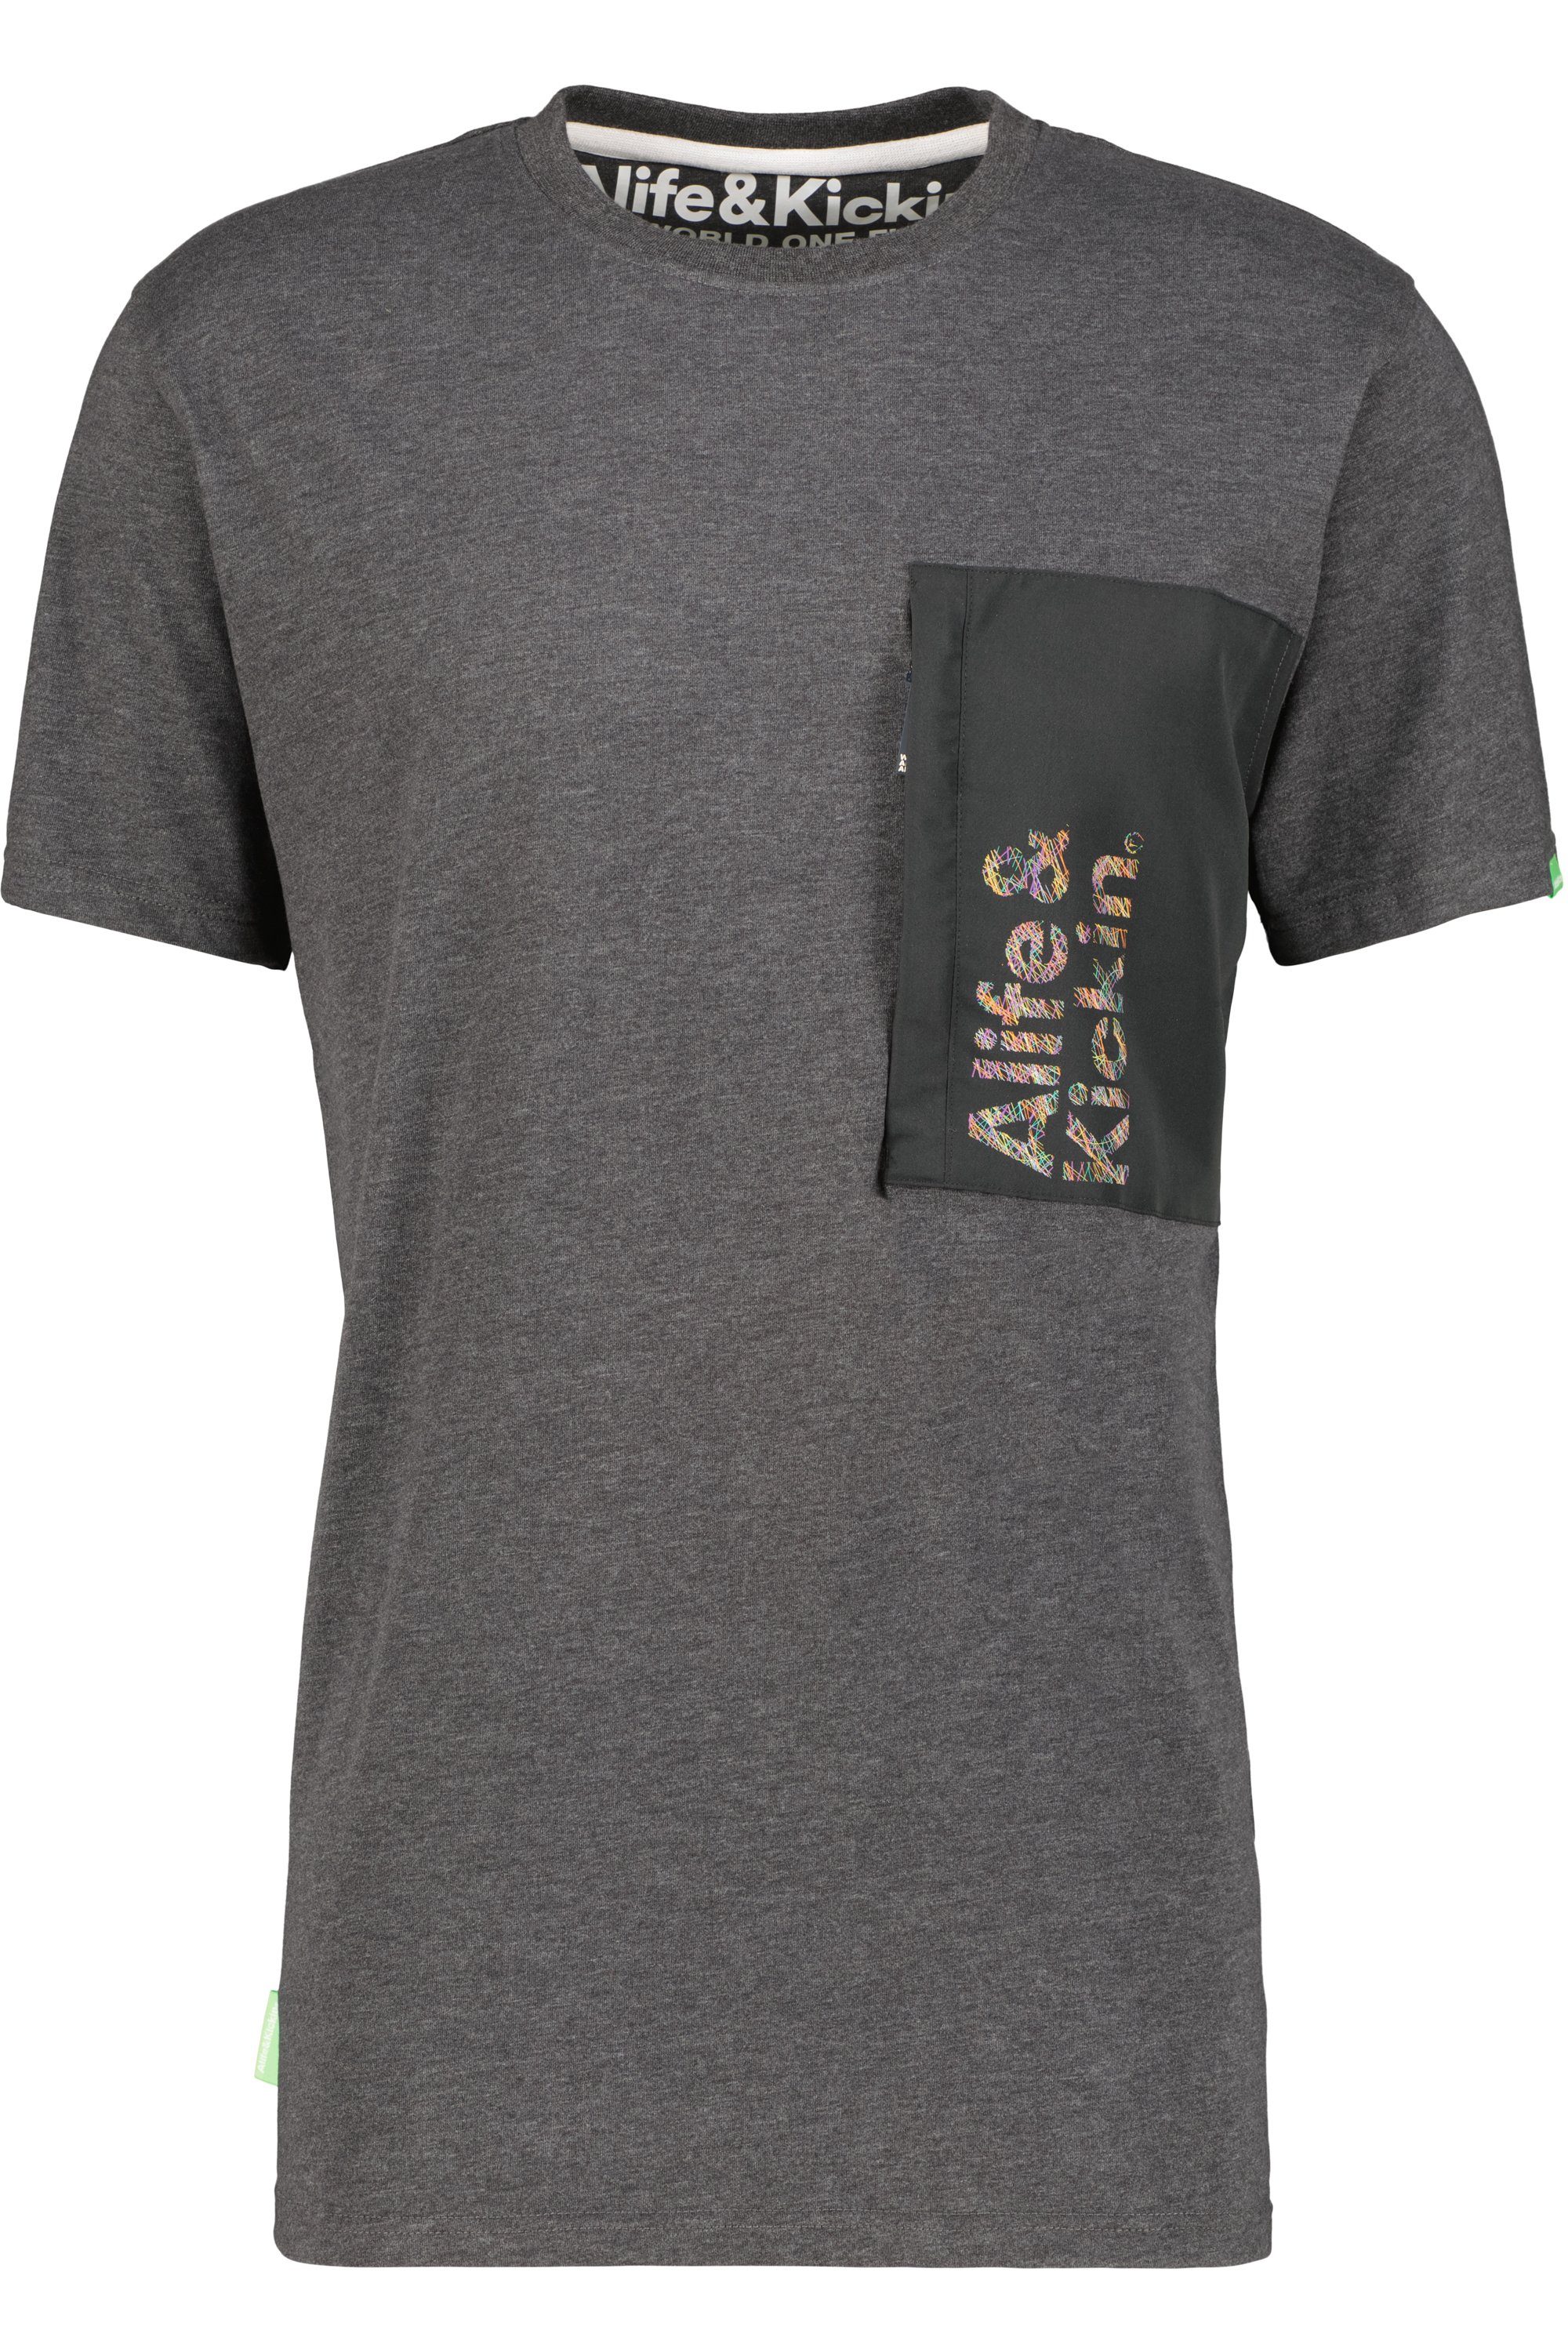 Alife Kickin Shirt RossAK Herren T-Shirt T-Shirt & moonless